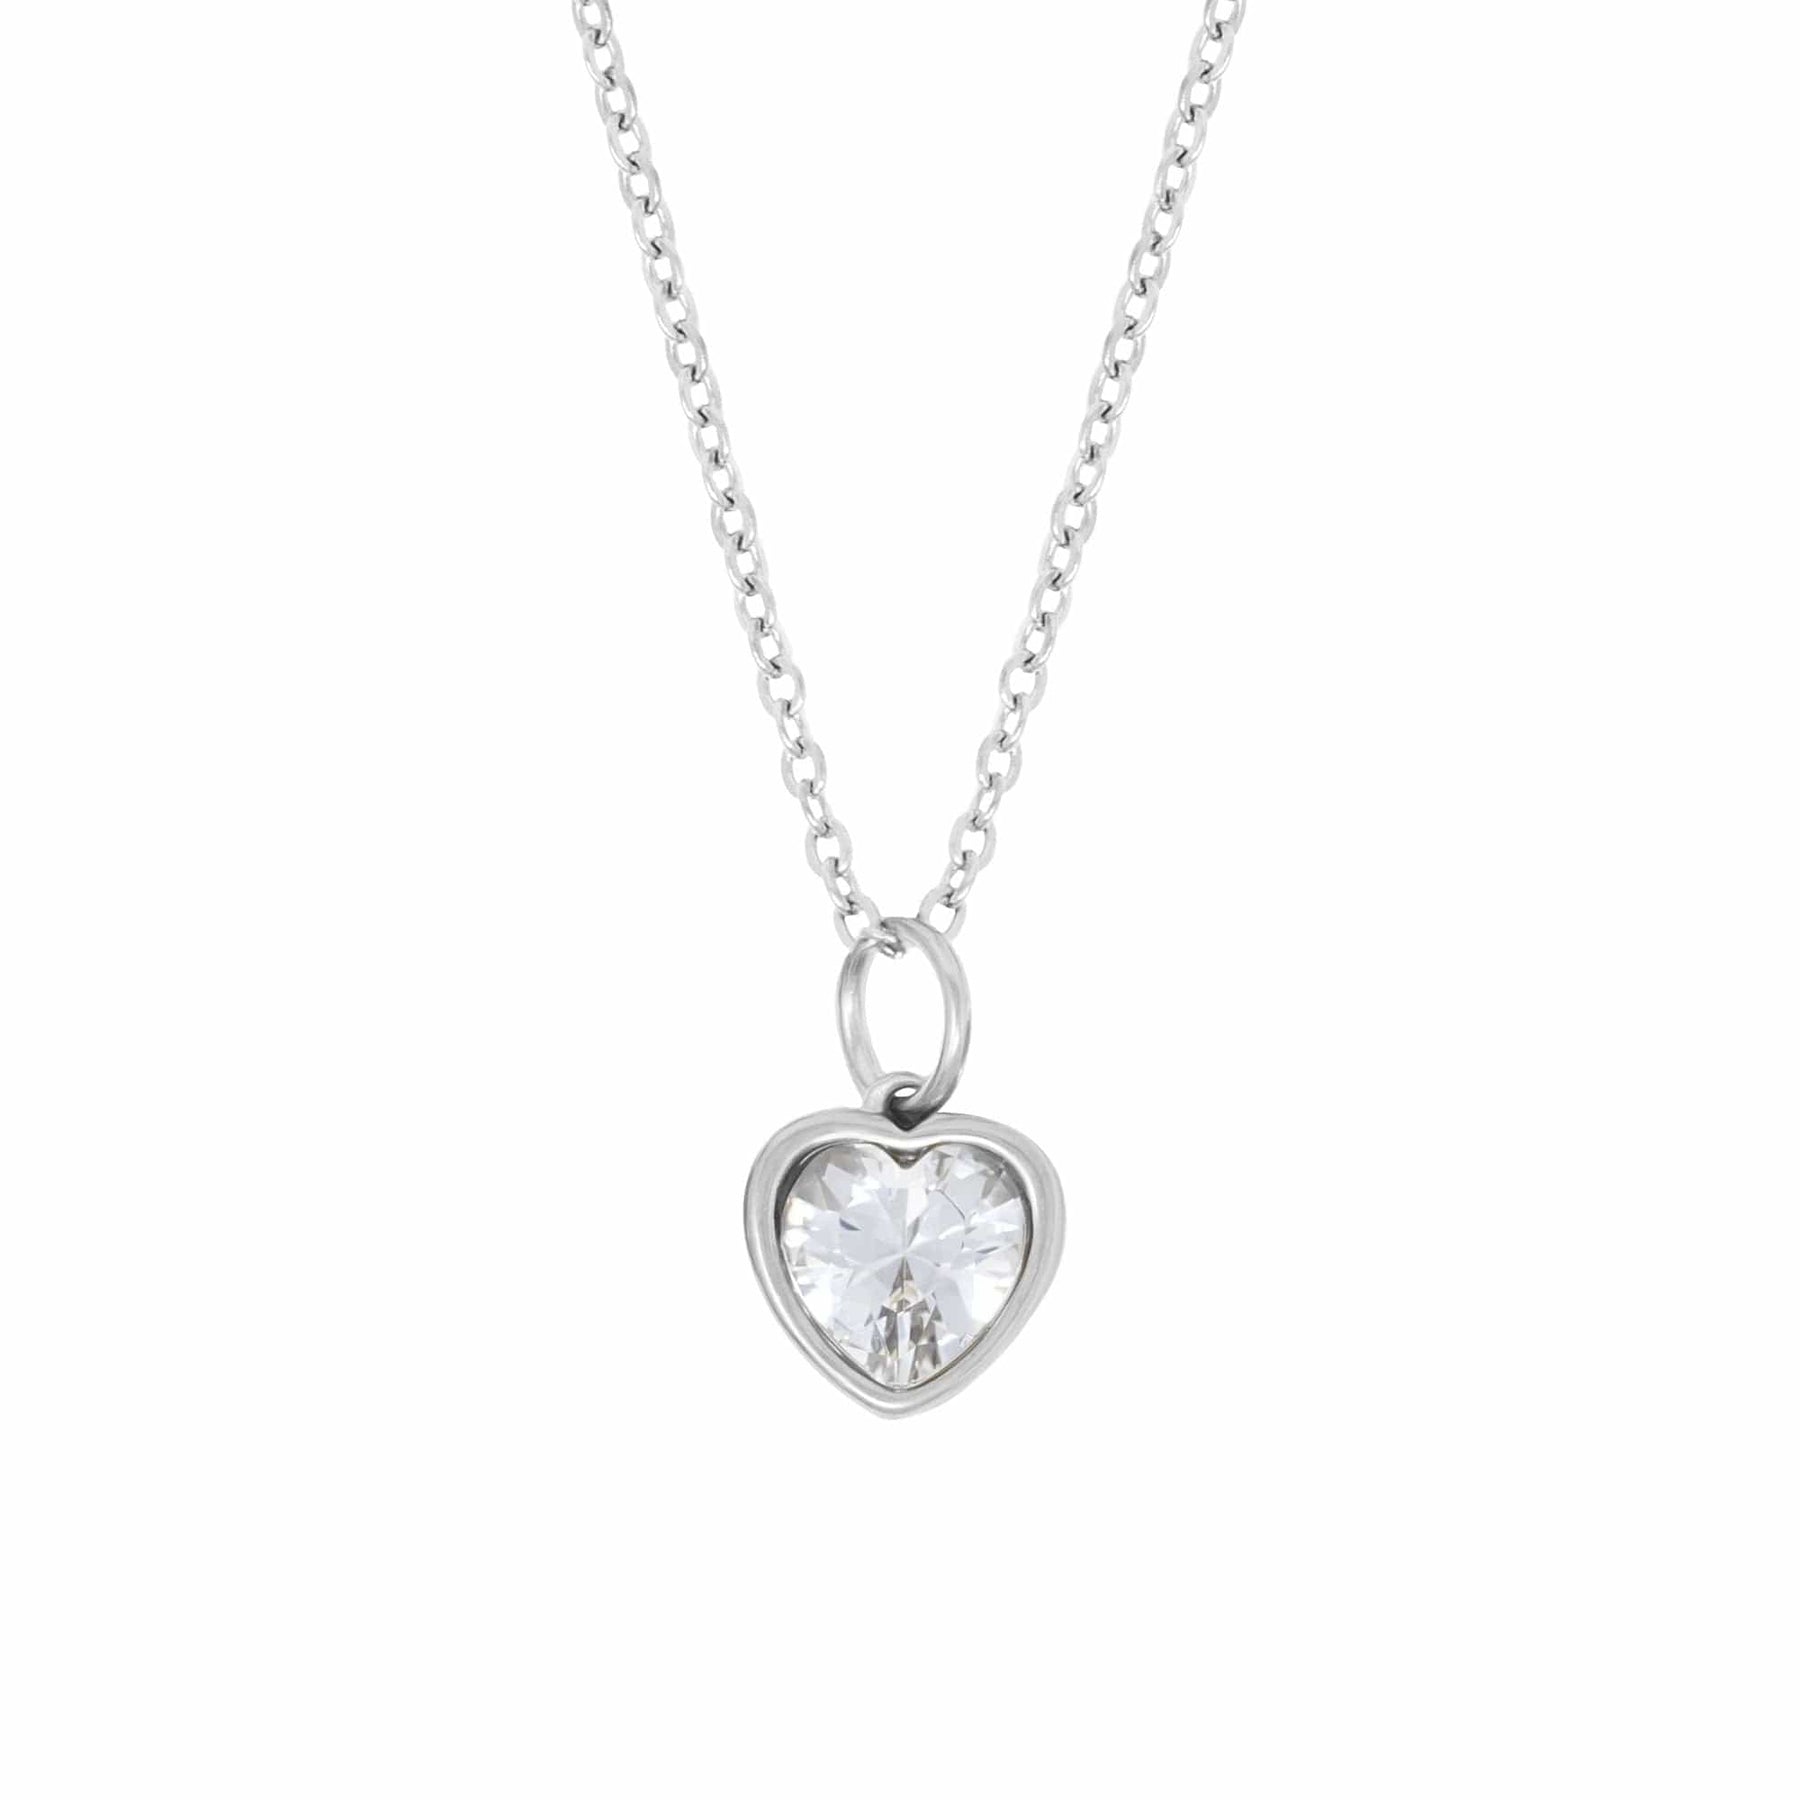 BohoMoon Stainless Steel Love Heart Birthstone Necklace